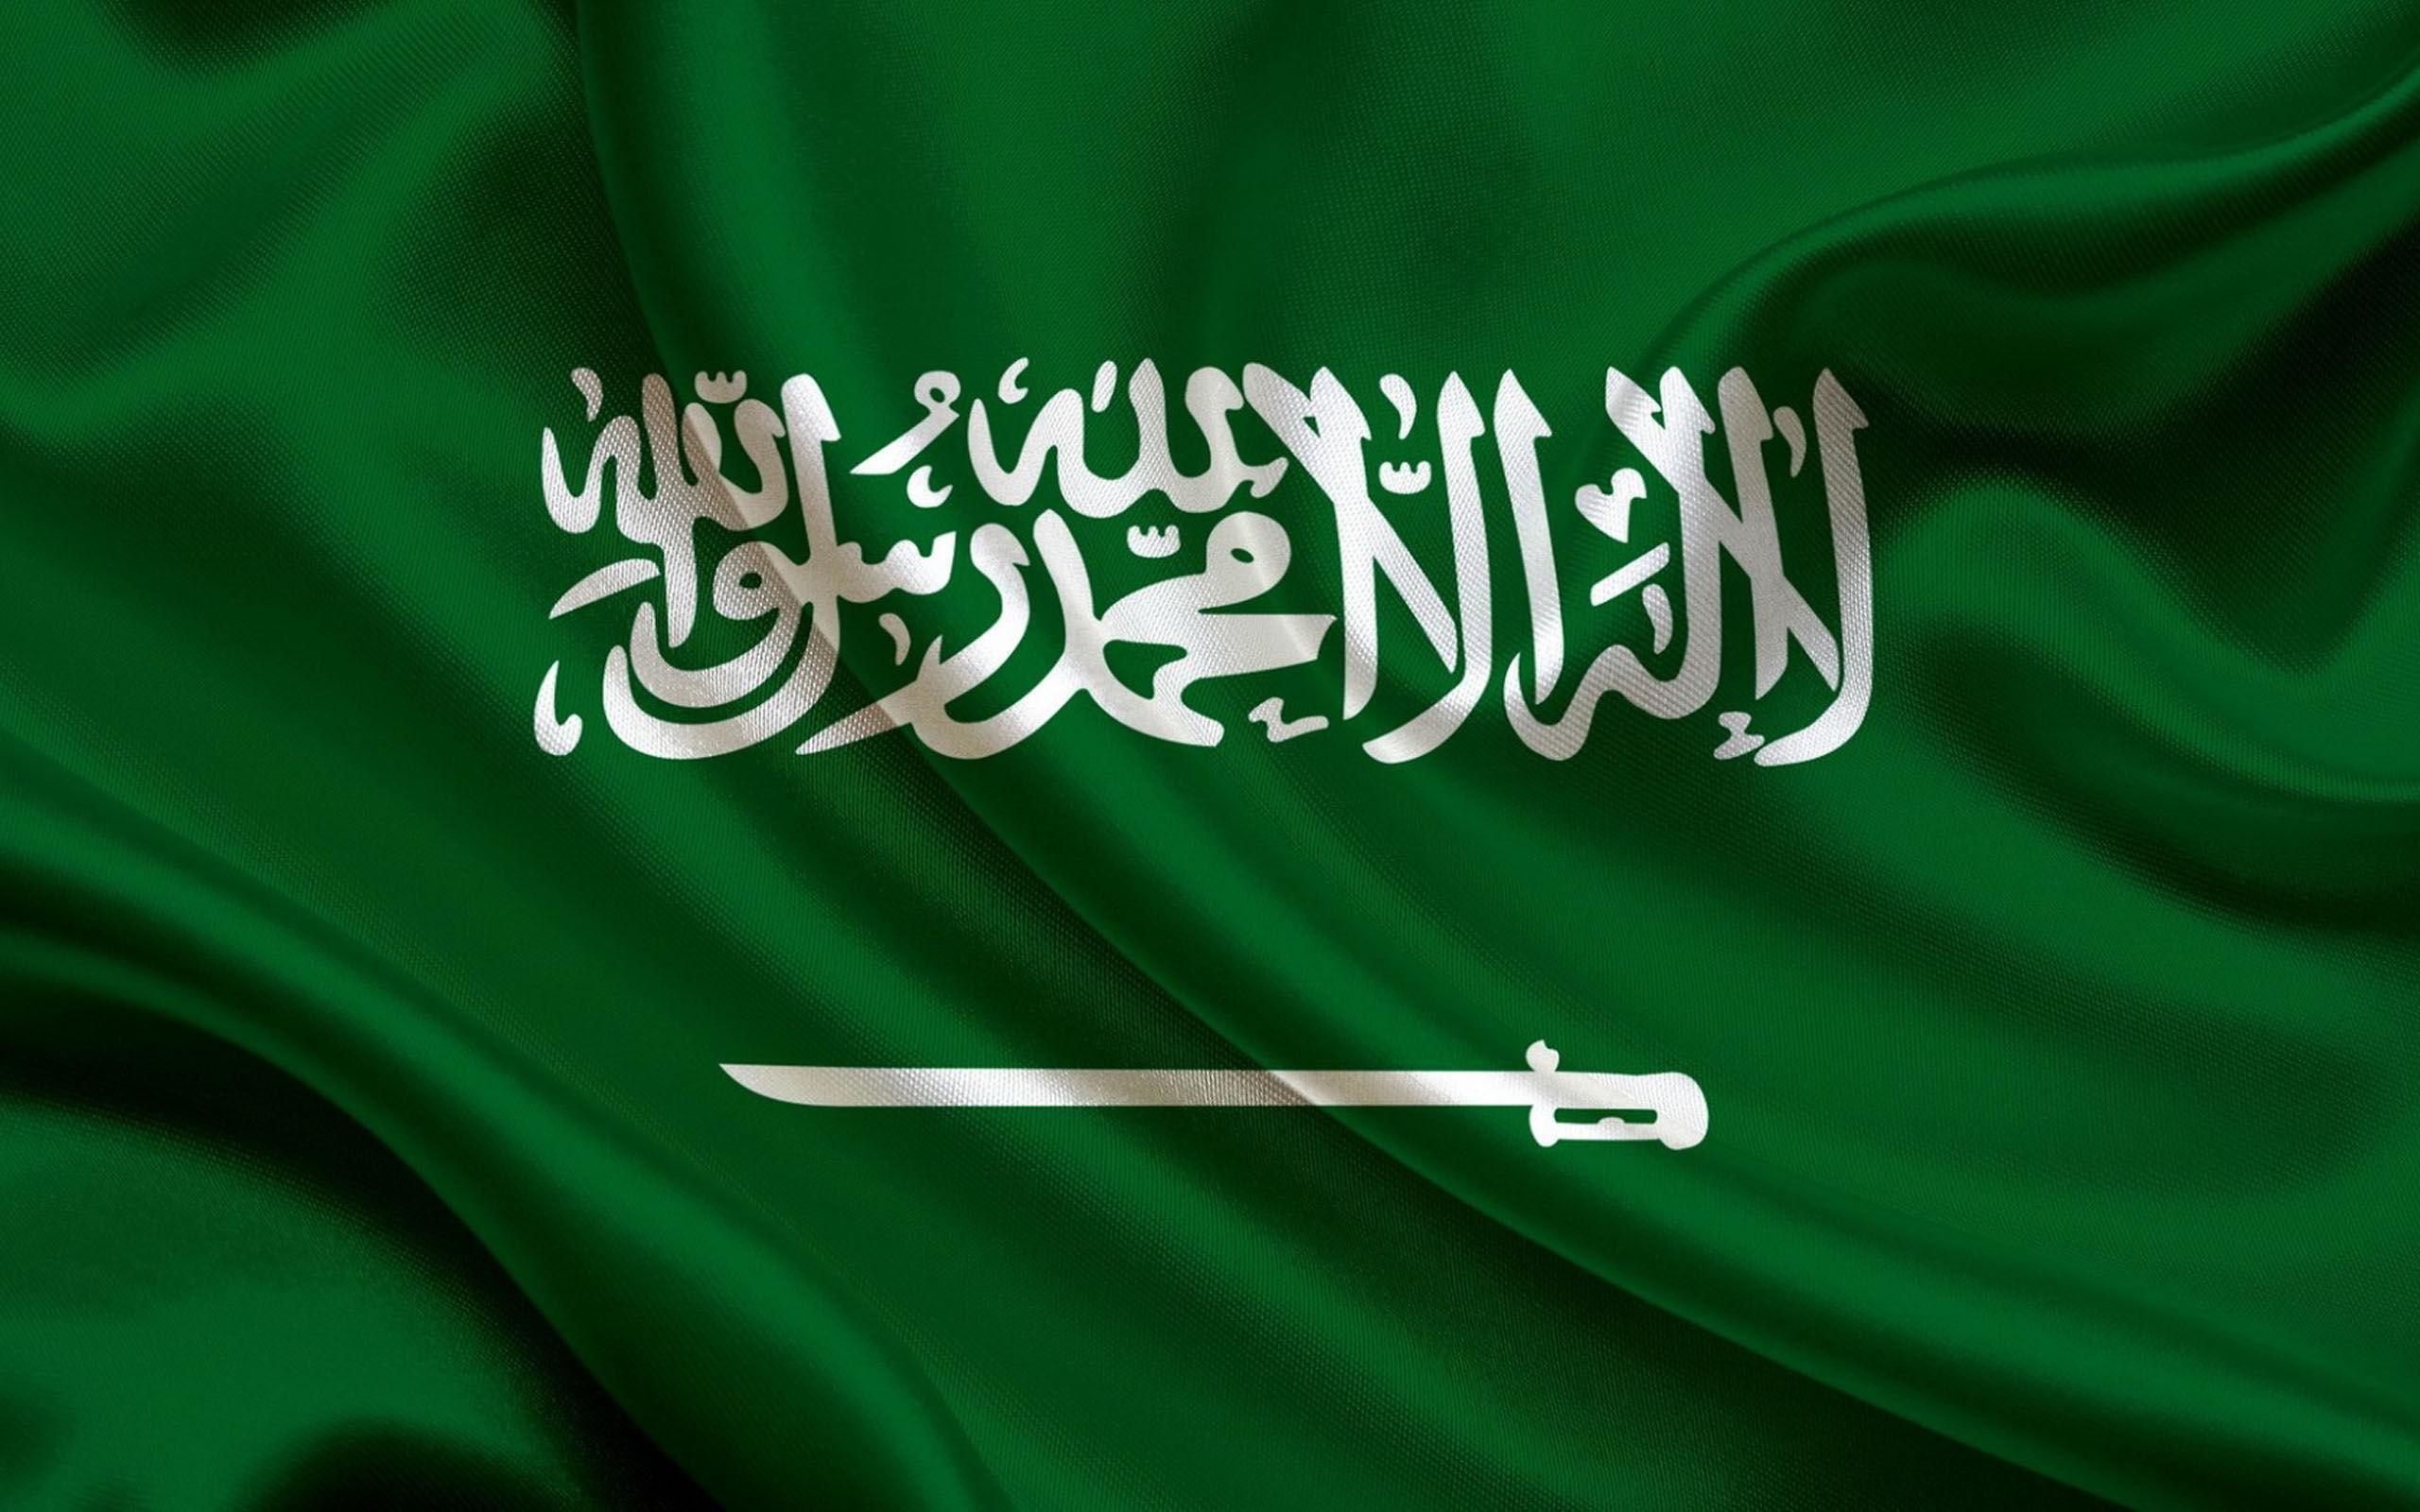 Saudi Arabia Flag Wallpaper for Android